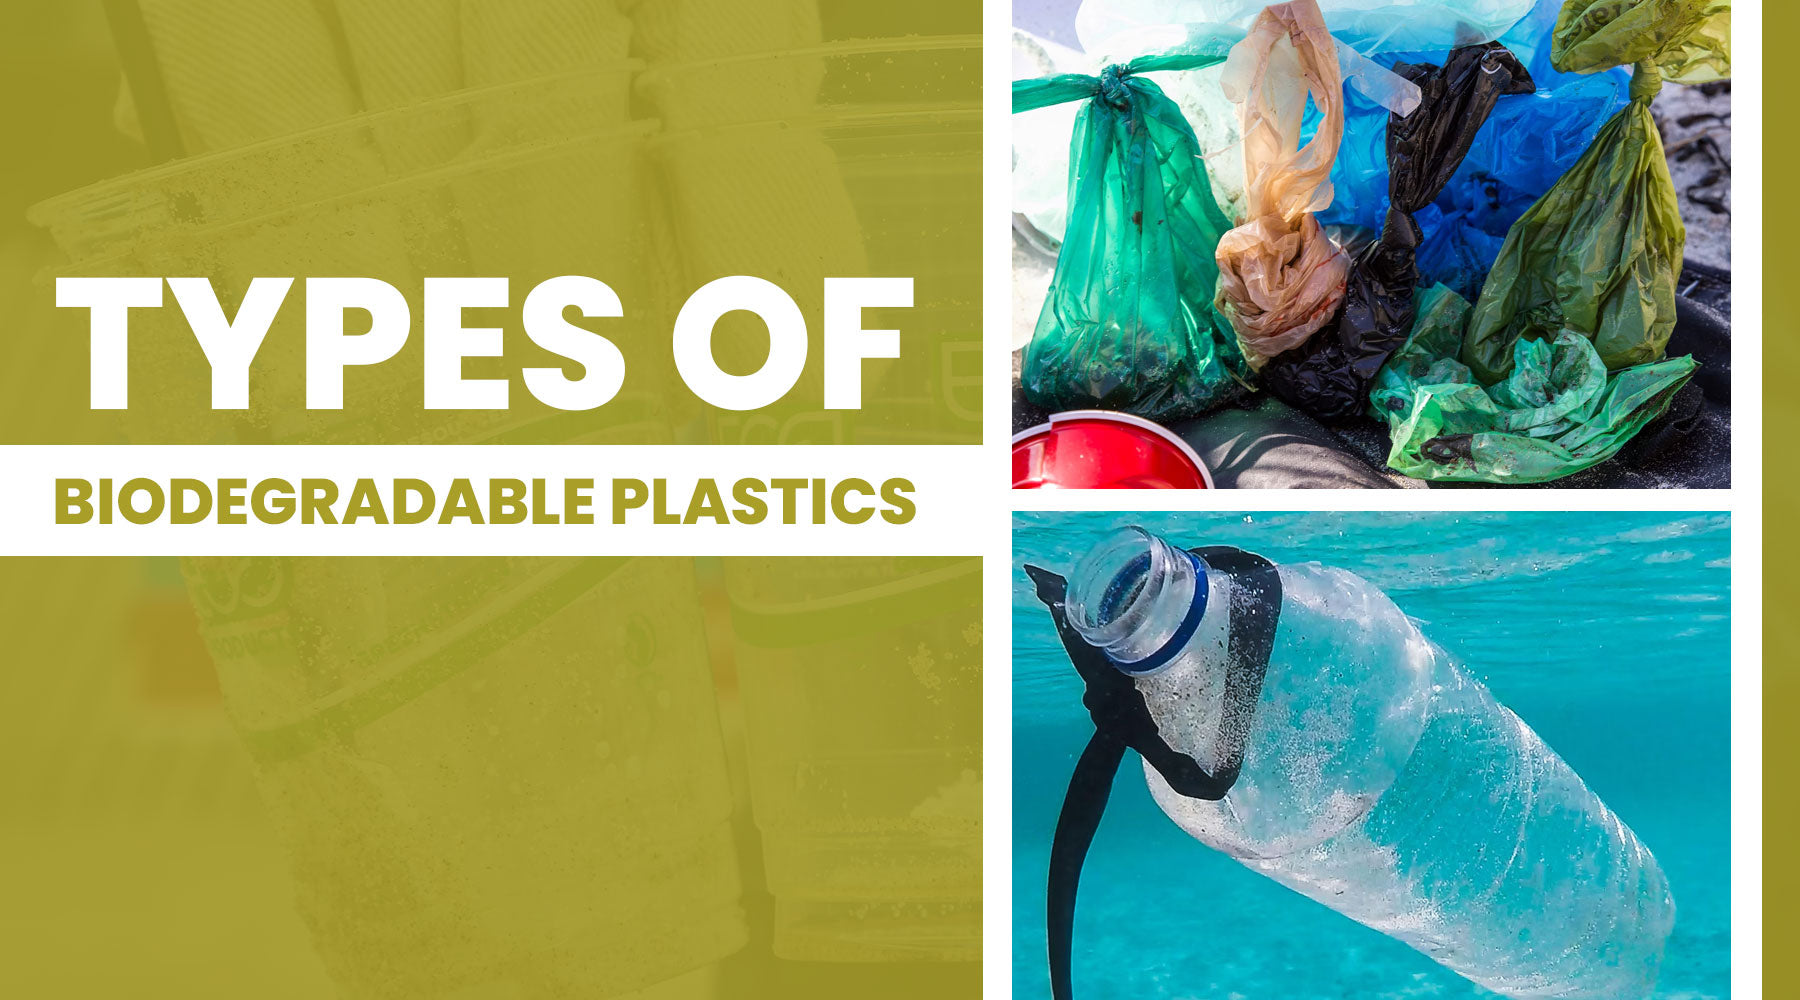 biodegradable plastics